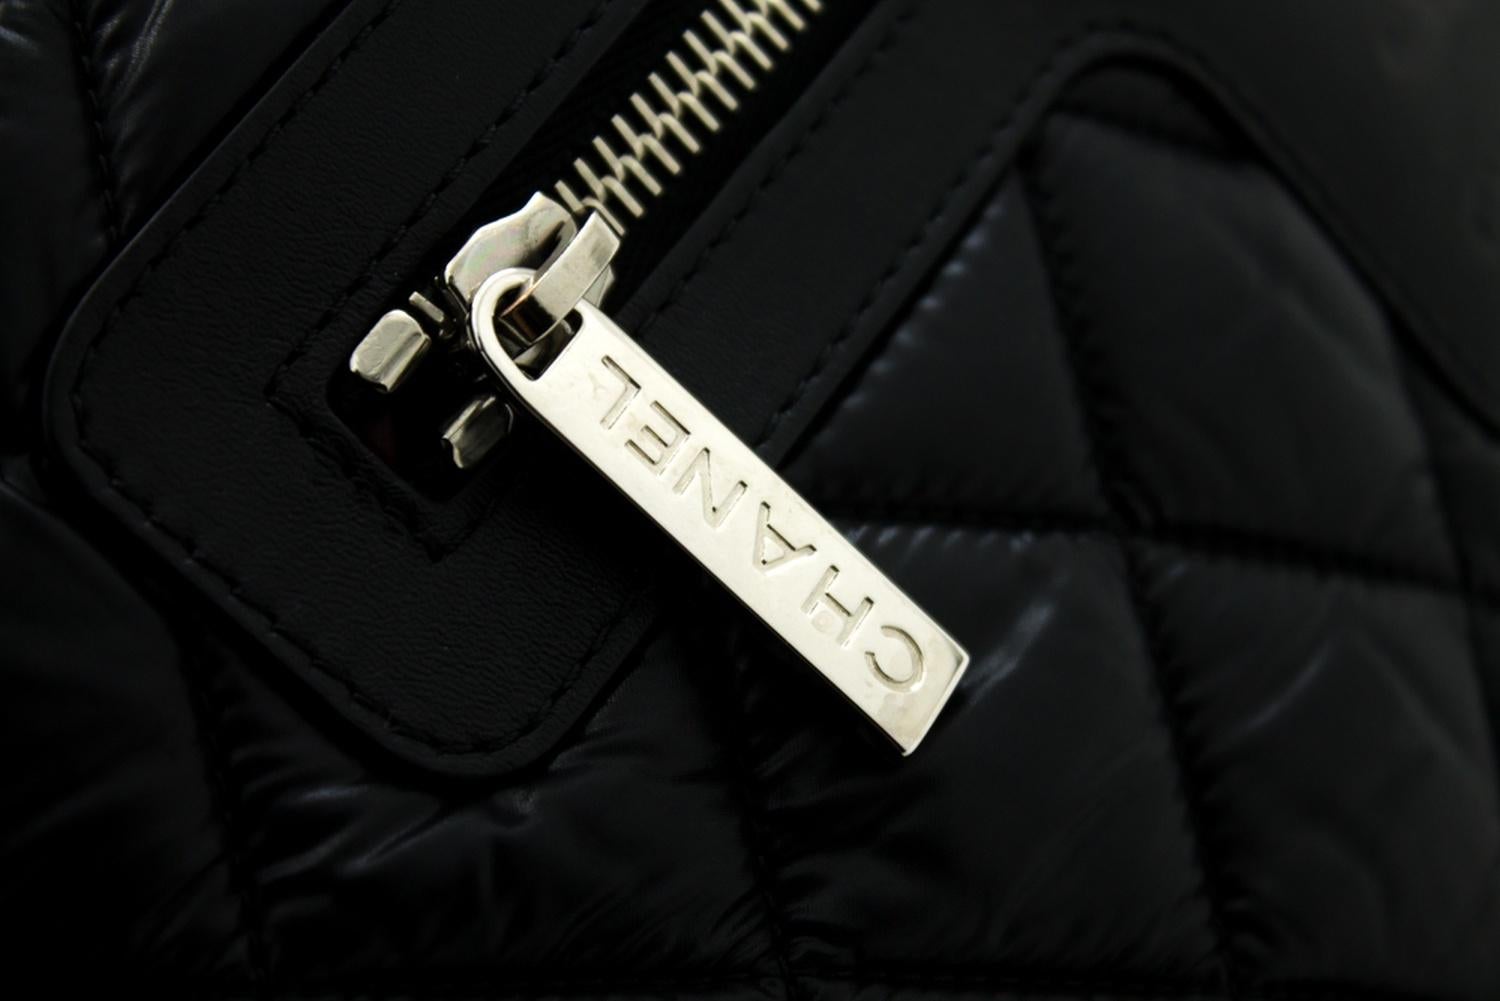 CHANEL Coco Cocoon Nylon Tote Bag Handbag Black Bordeaux Leather 8